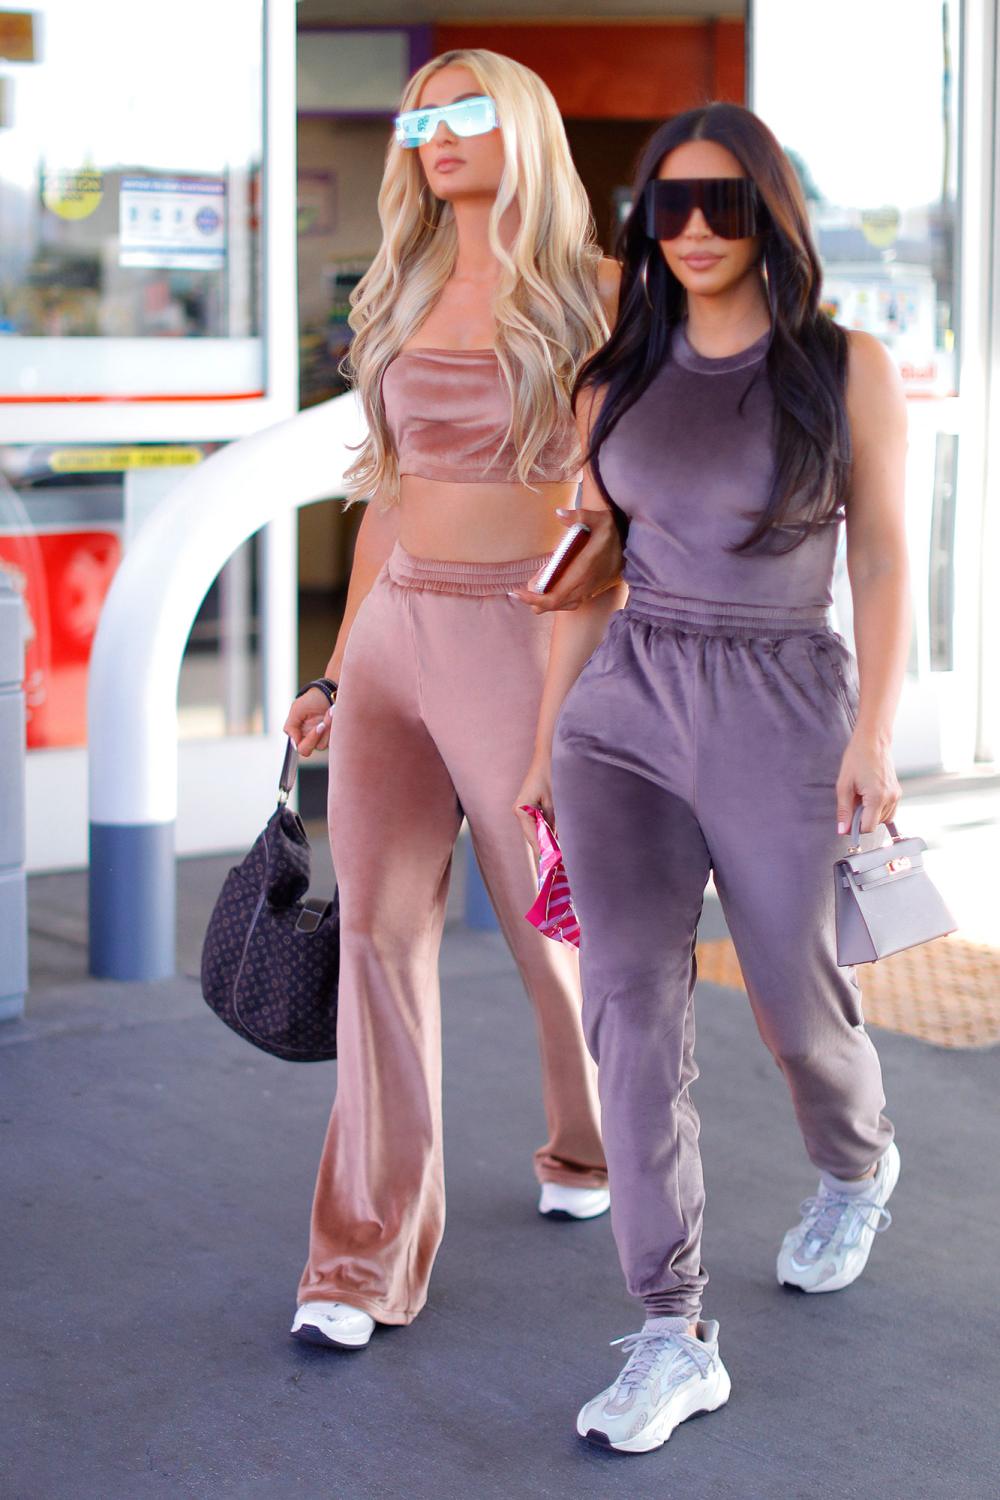 https://www.usmagazine.com/wp-content/uploads/2020/10/Kim-Kardashian-and-Paris-Hilton-Twin-in-Velour-Tracksuits-for-Skims-2.jpg?w=1000&quality=74&strip=all